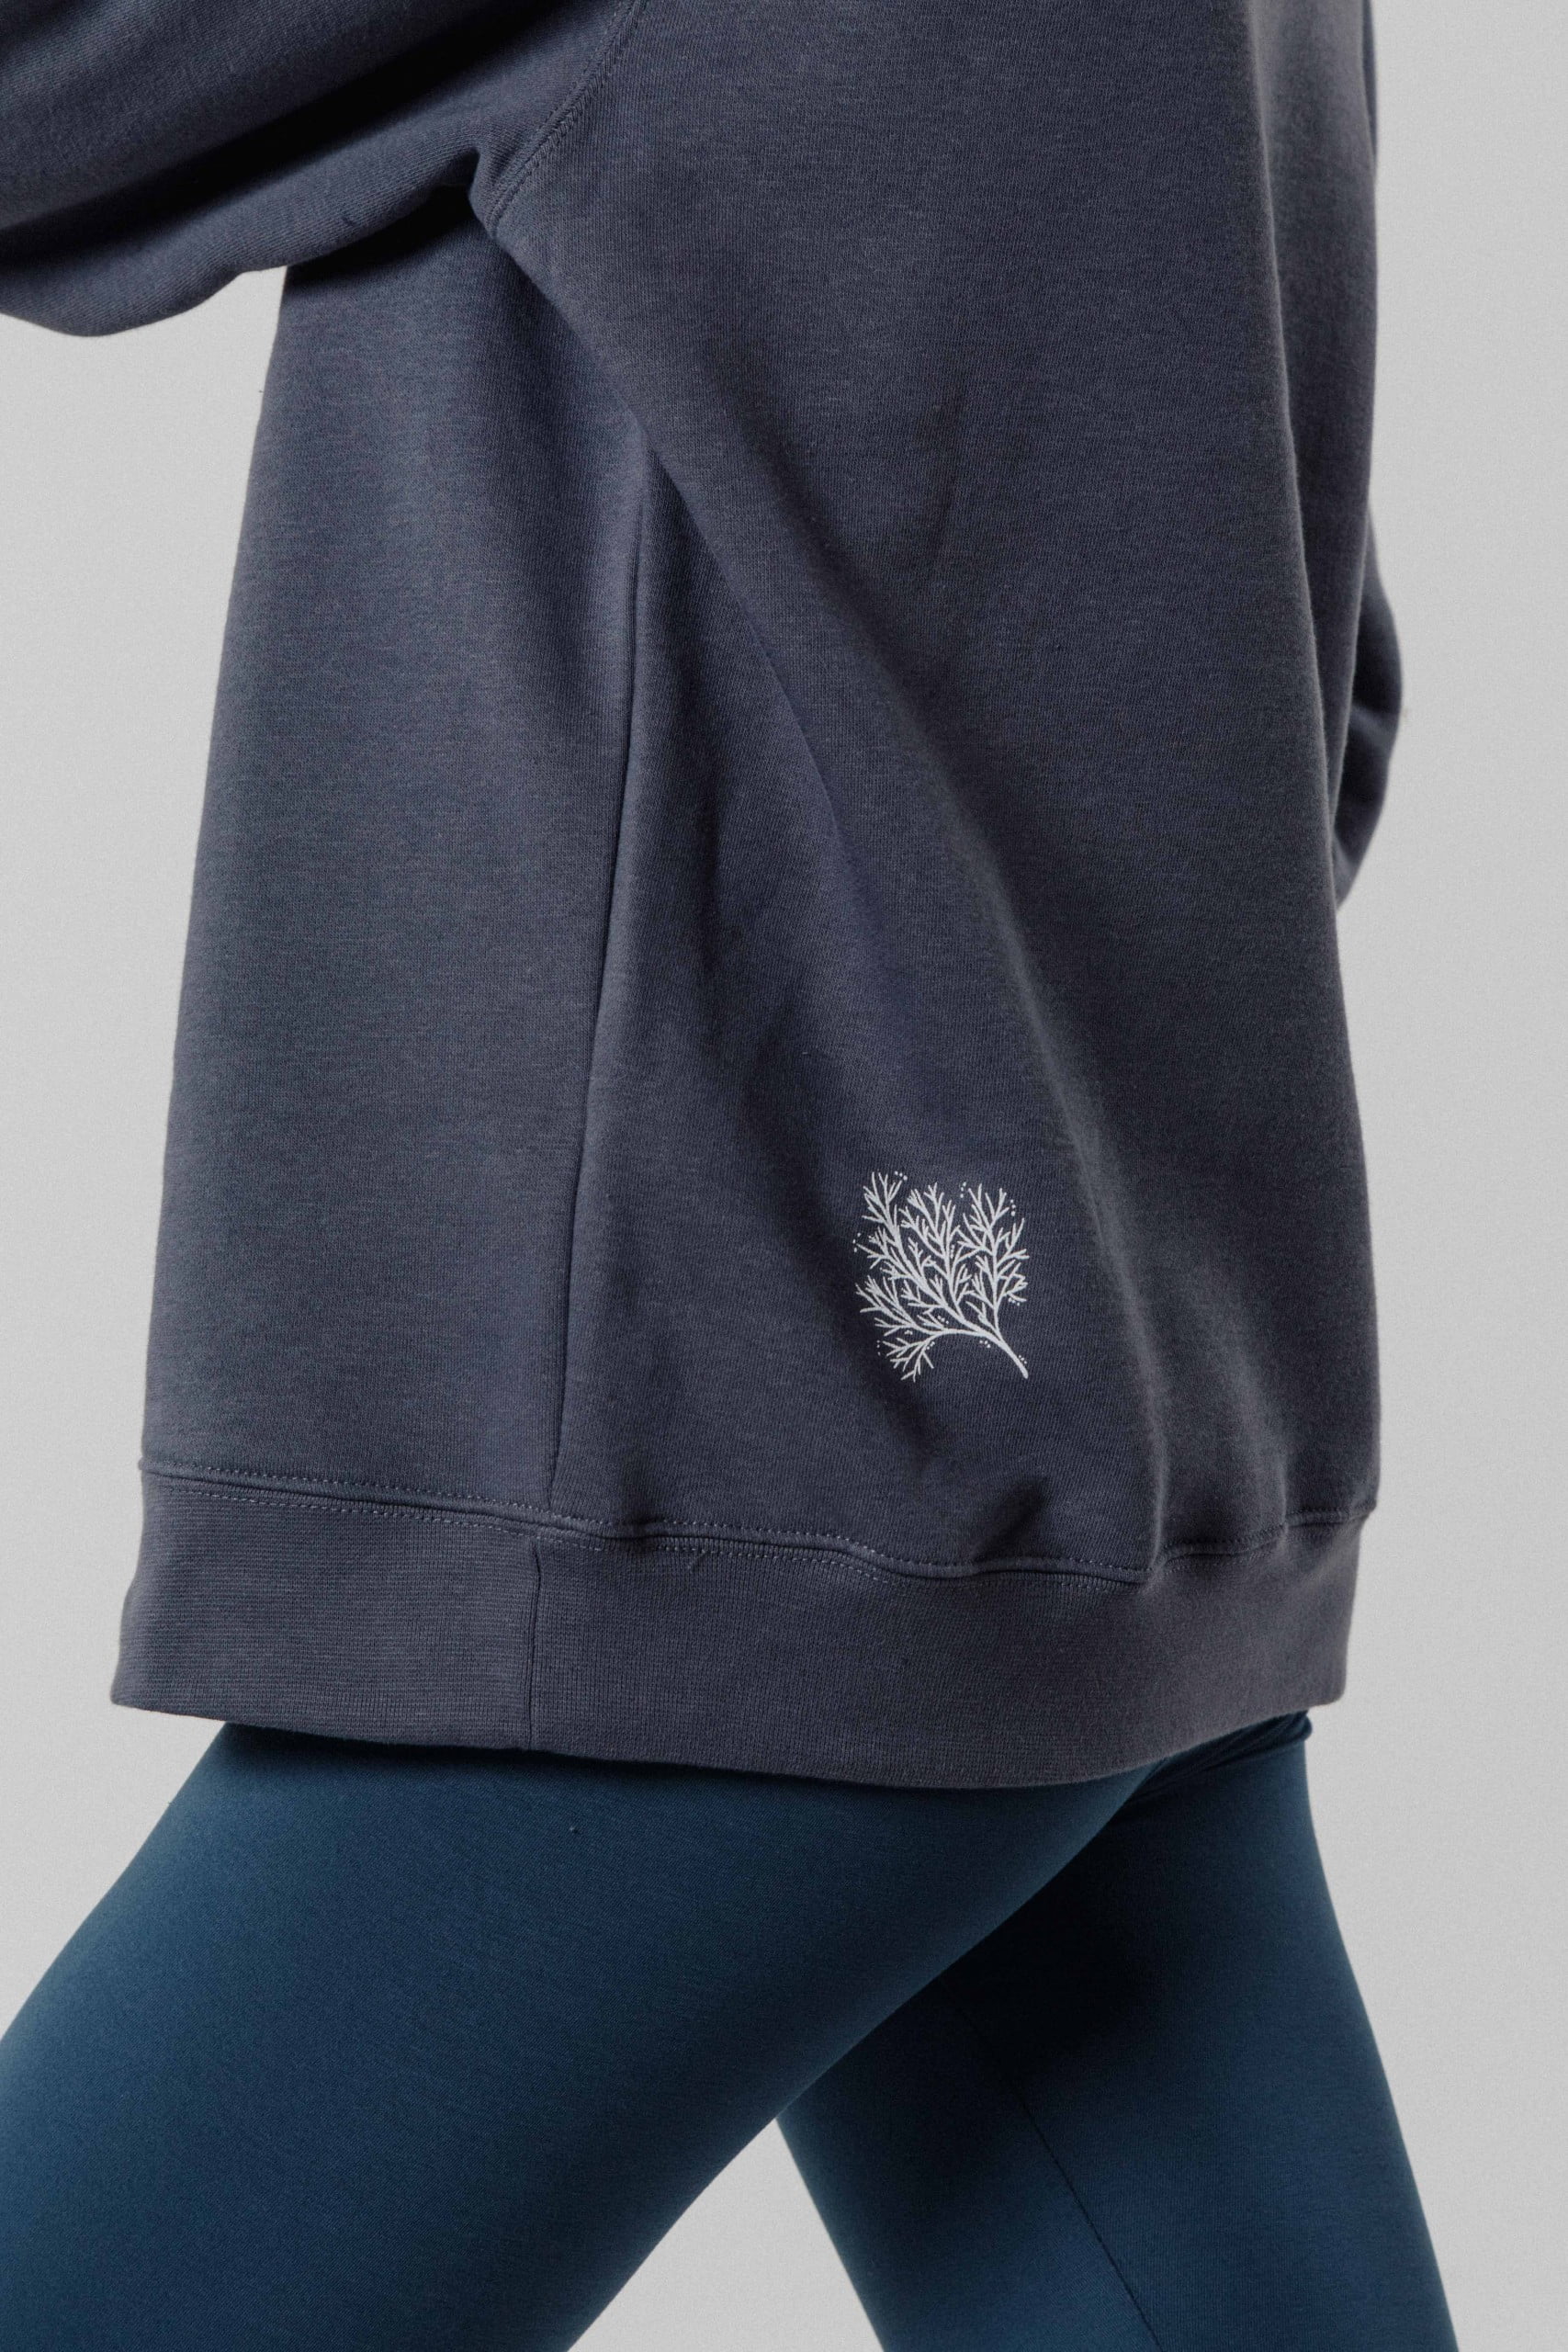 KRISTA BITMETE Unisex Sweatshirt “Just Dill With It” Green - M50